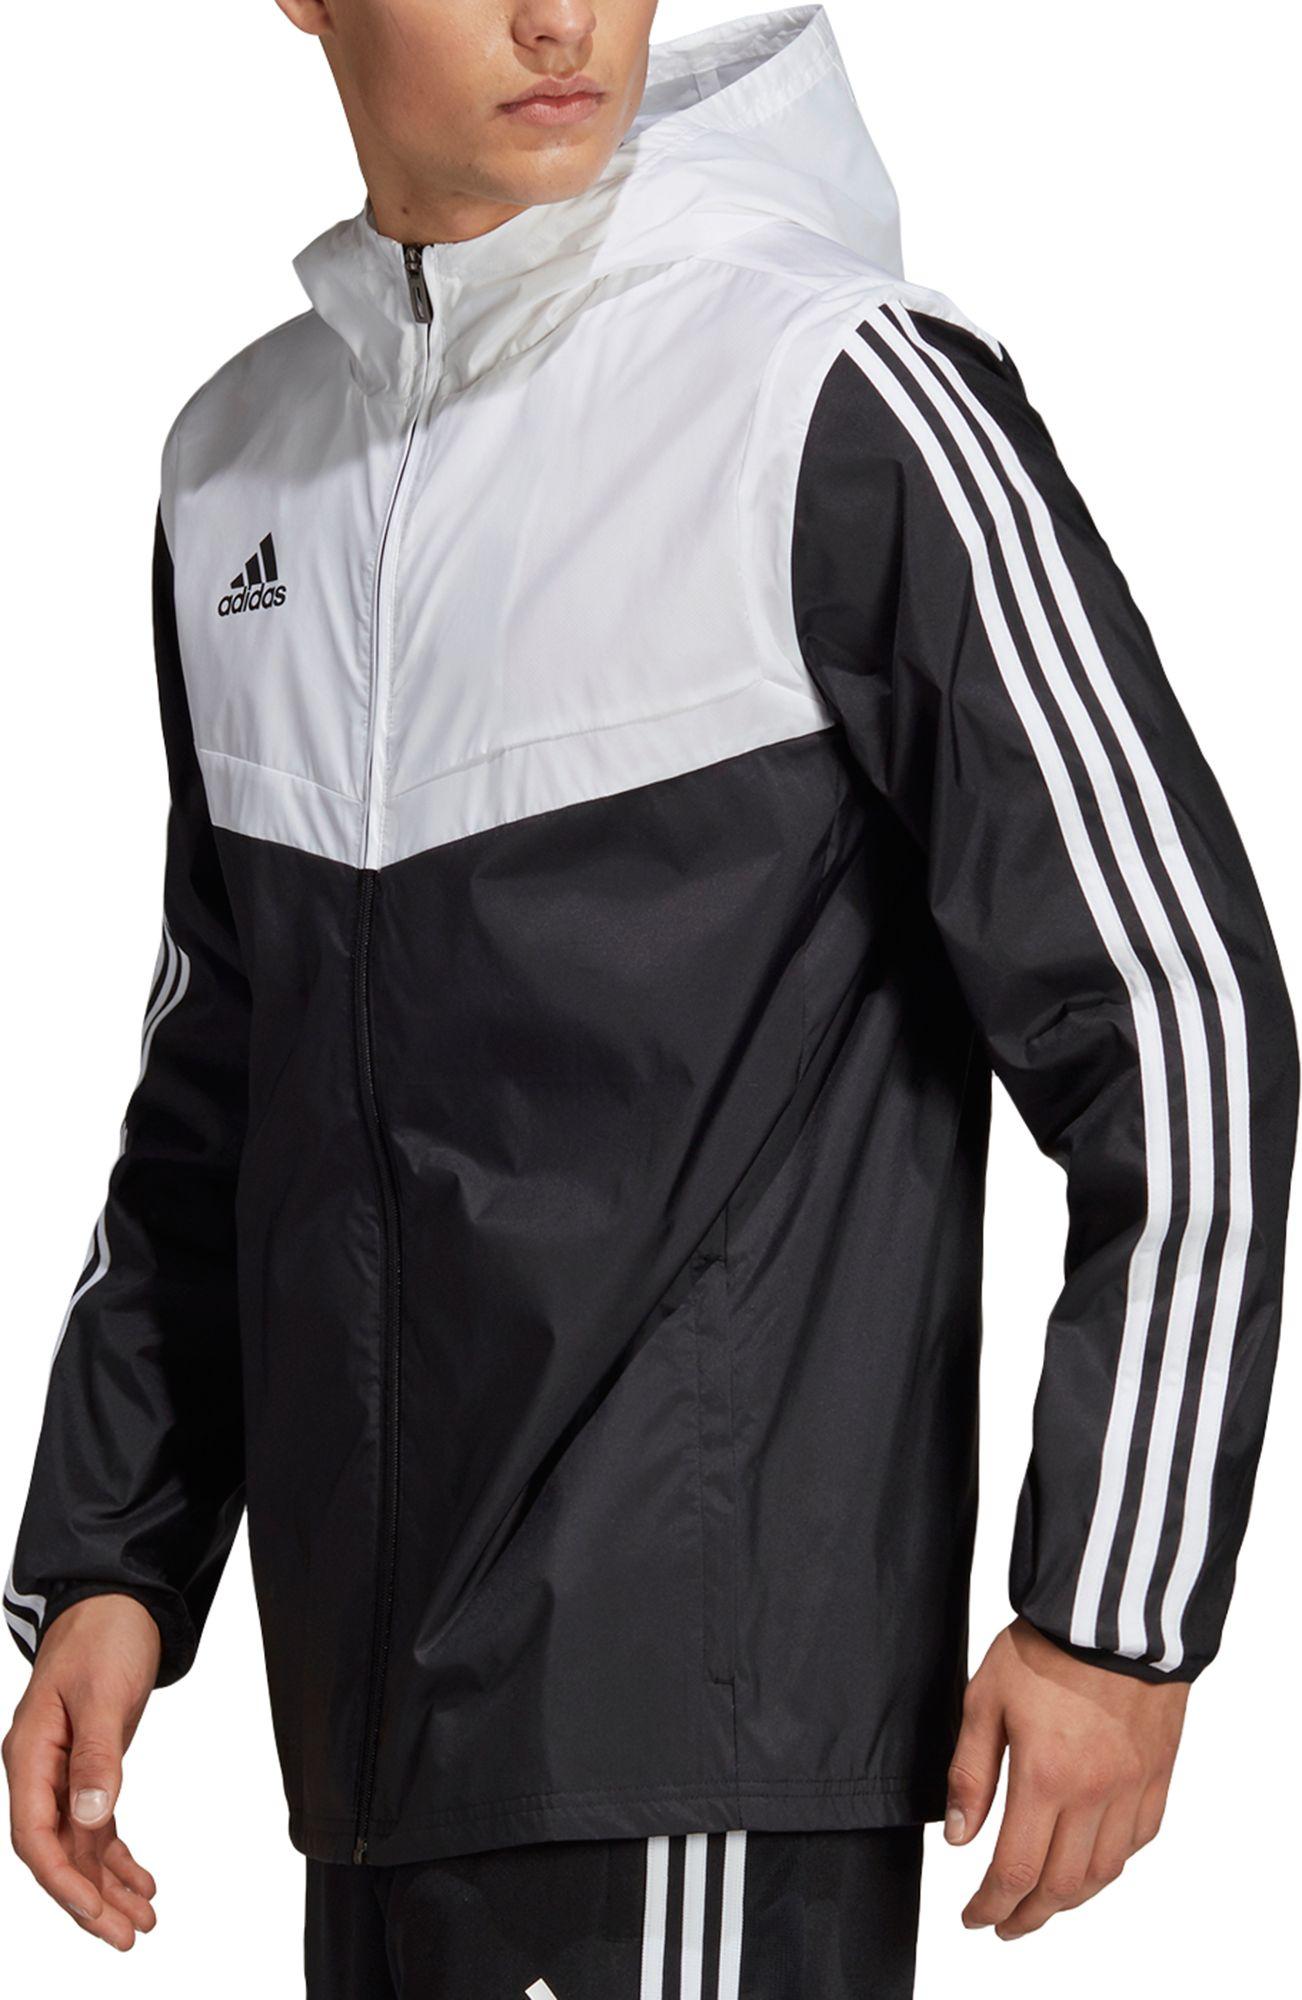 adidas Tiro Windbreaker Jacket in Black/White (Black) for Men - Lyst